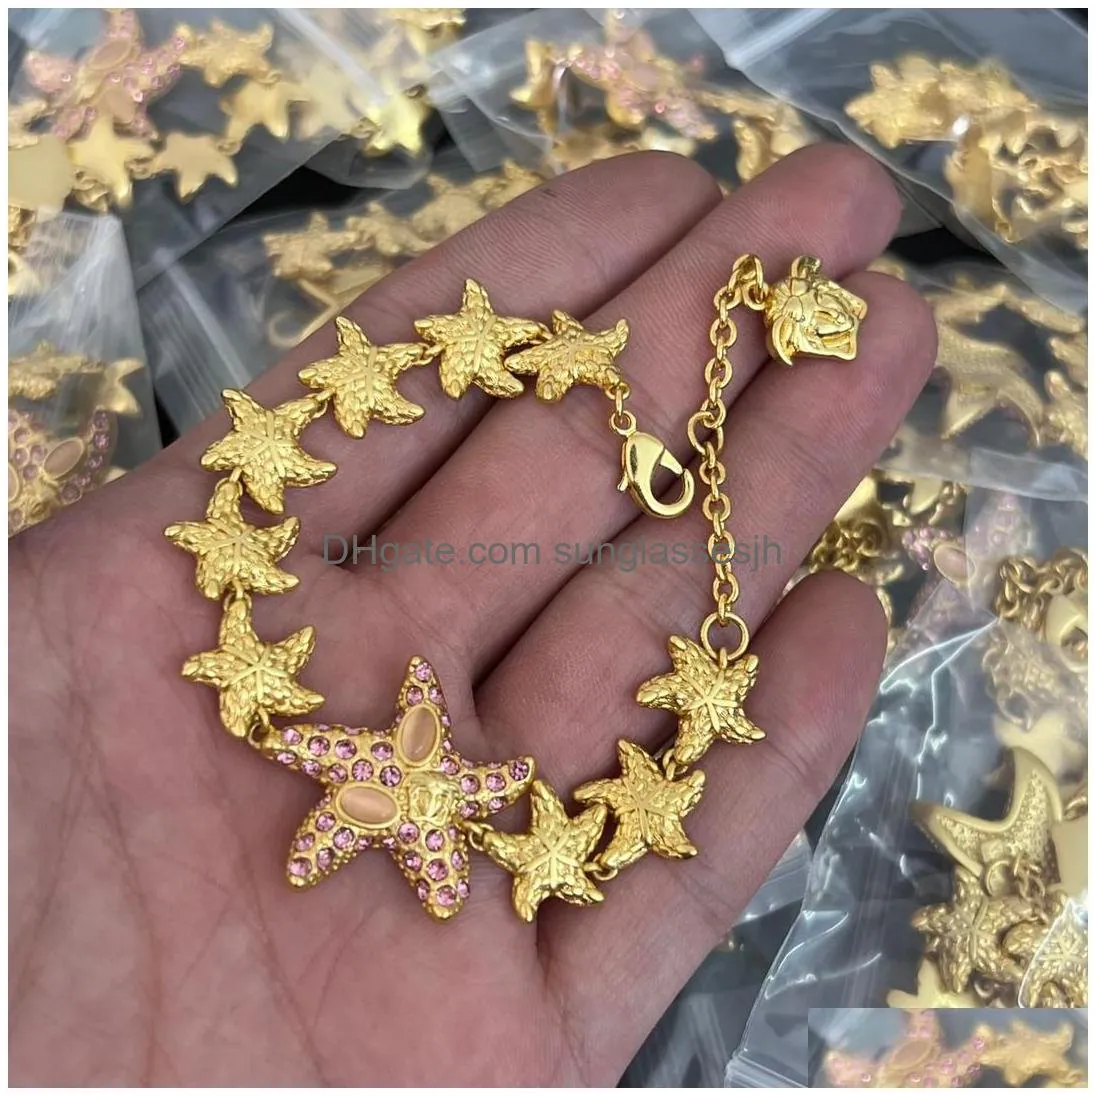 fashion designed necklaces bracelet earring starfish pendant sea travel holiday style banshee  head portrait 18k gold plated designer jewelry